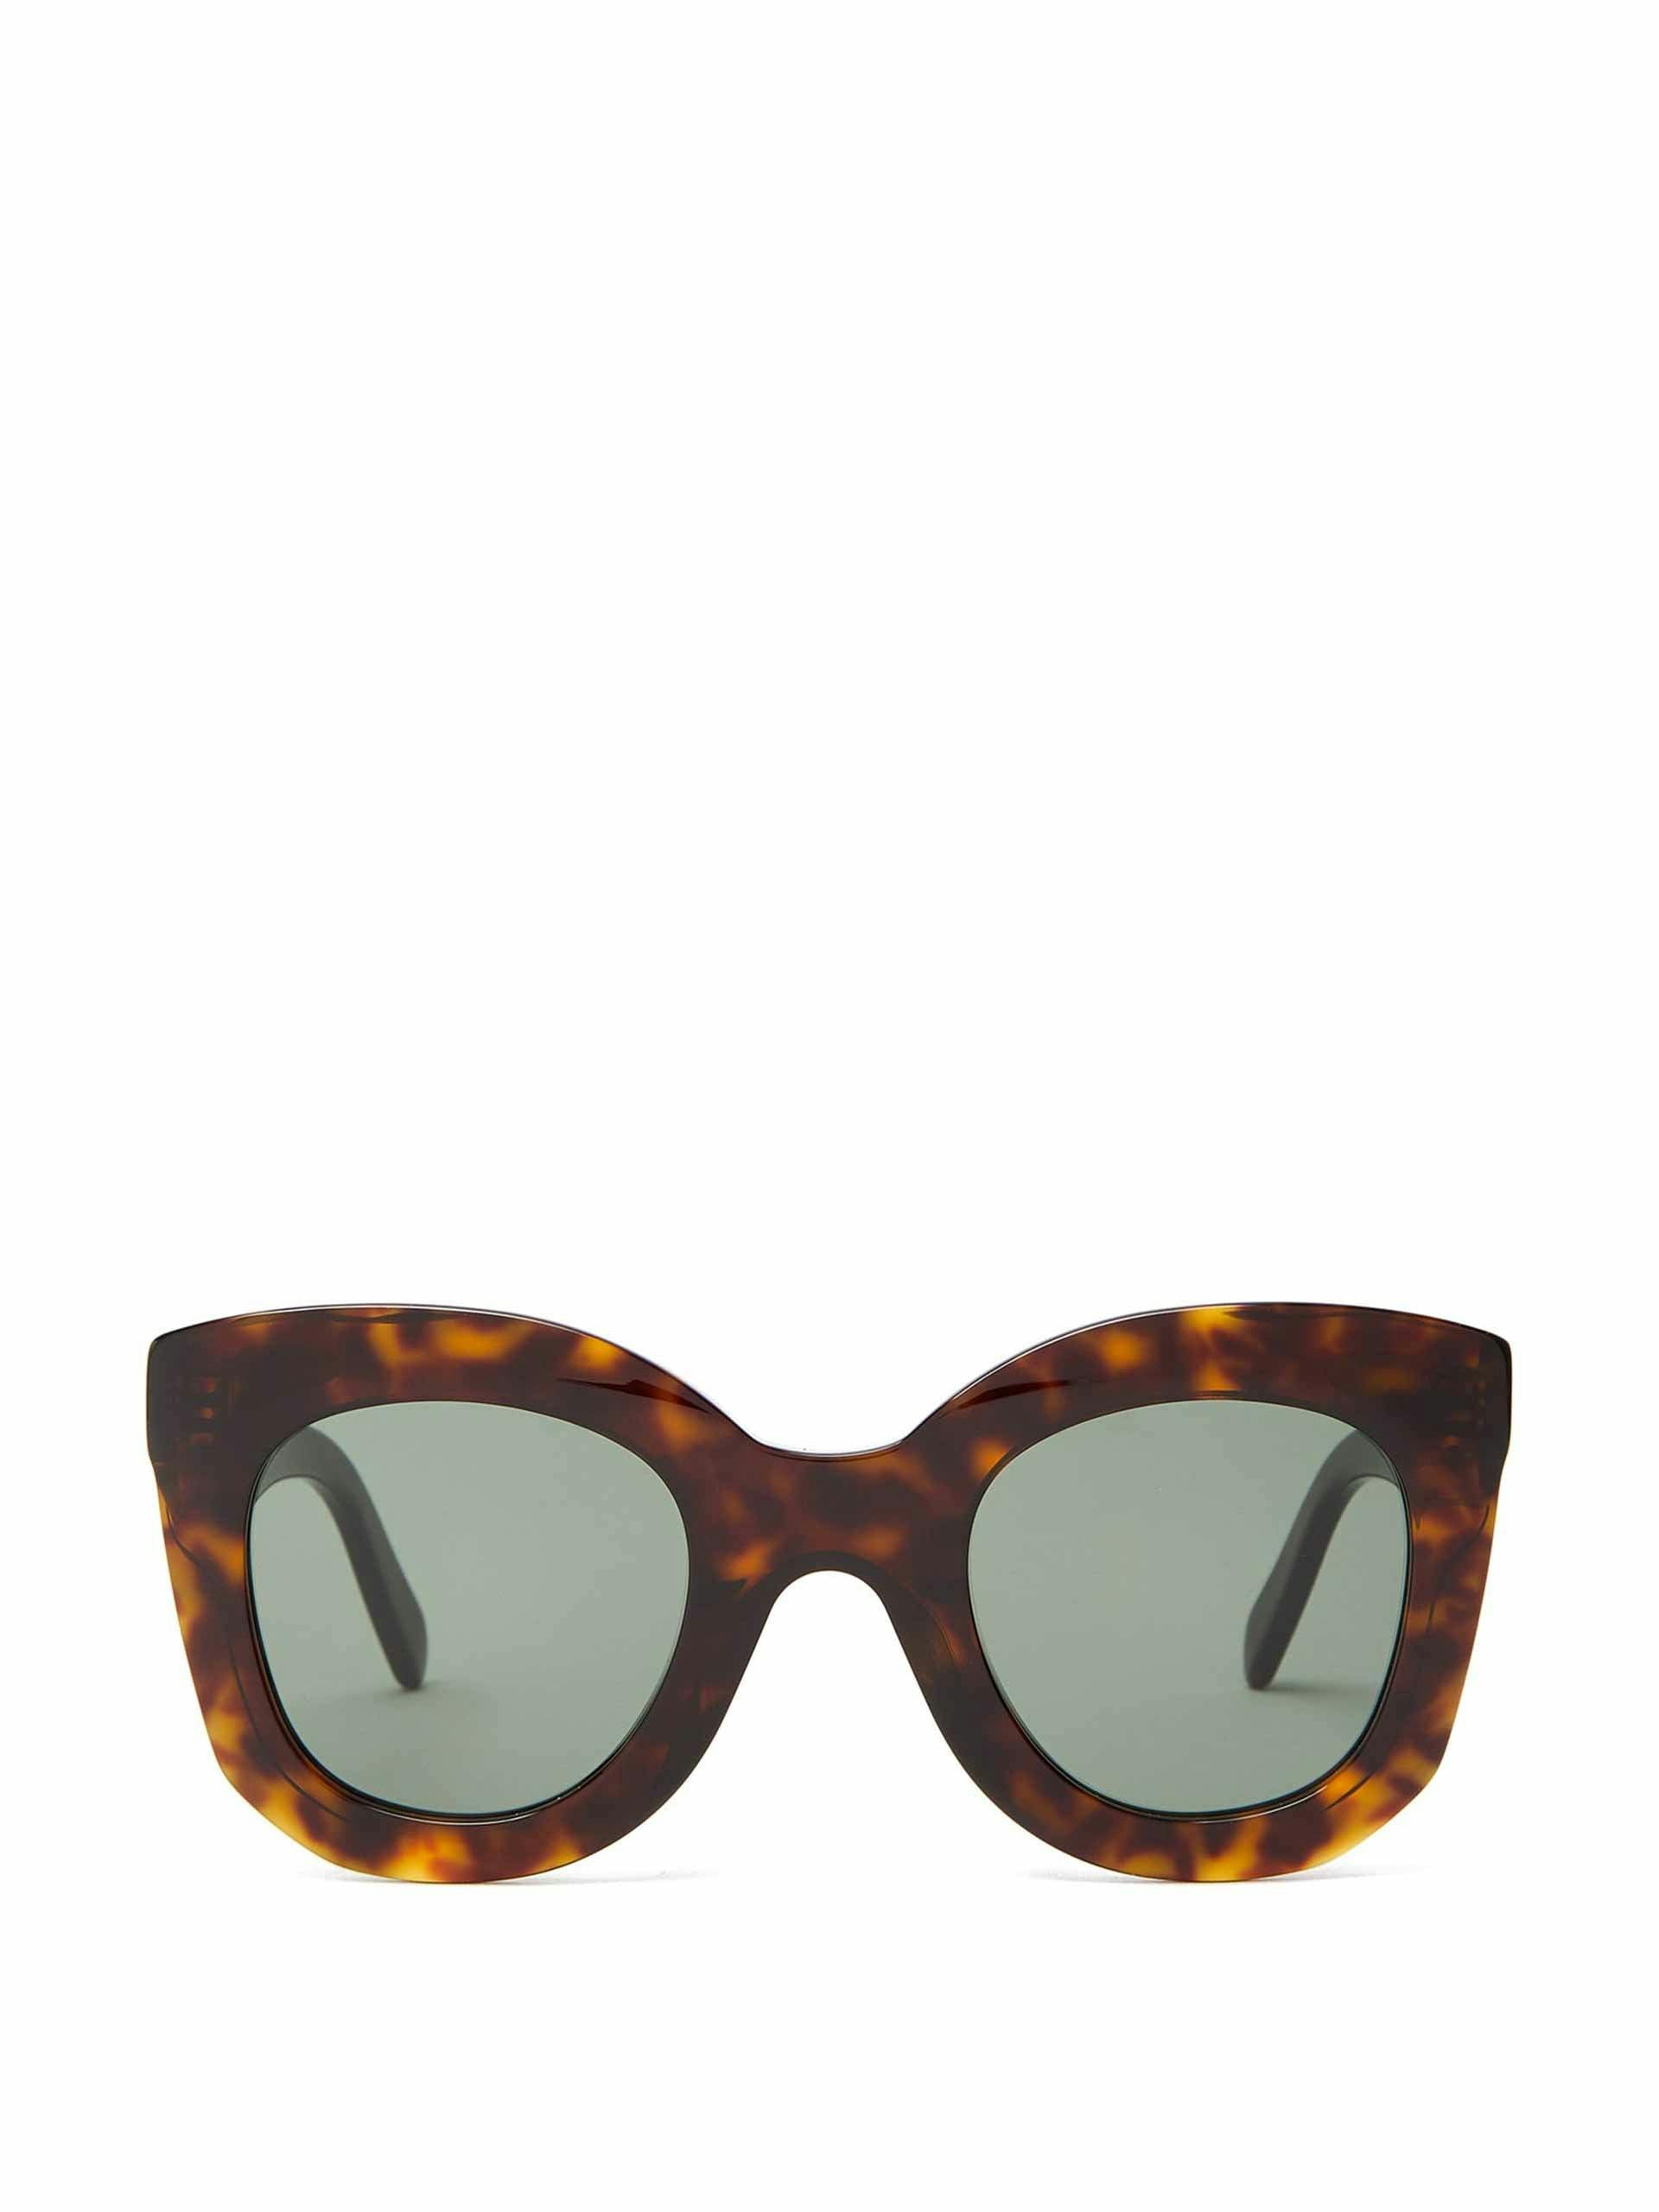 Oversized round tortoise-acetate sunglasses